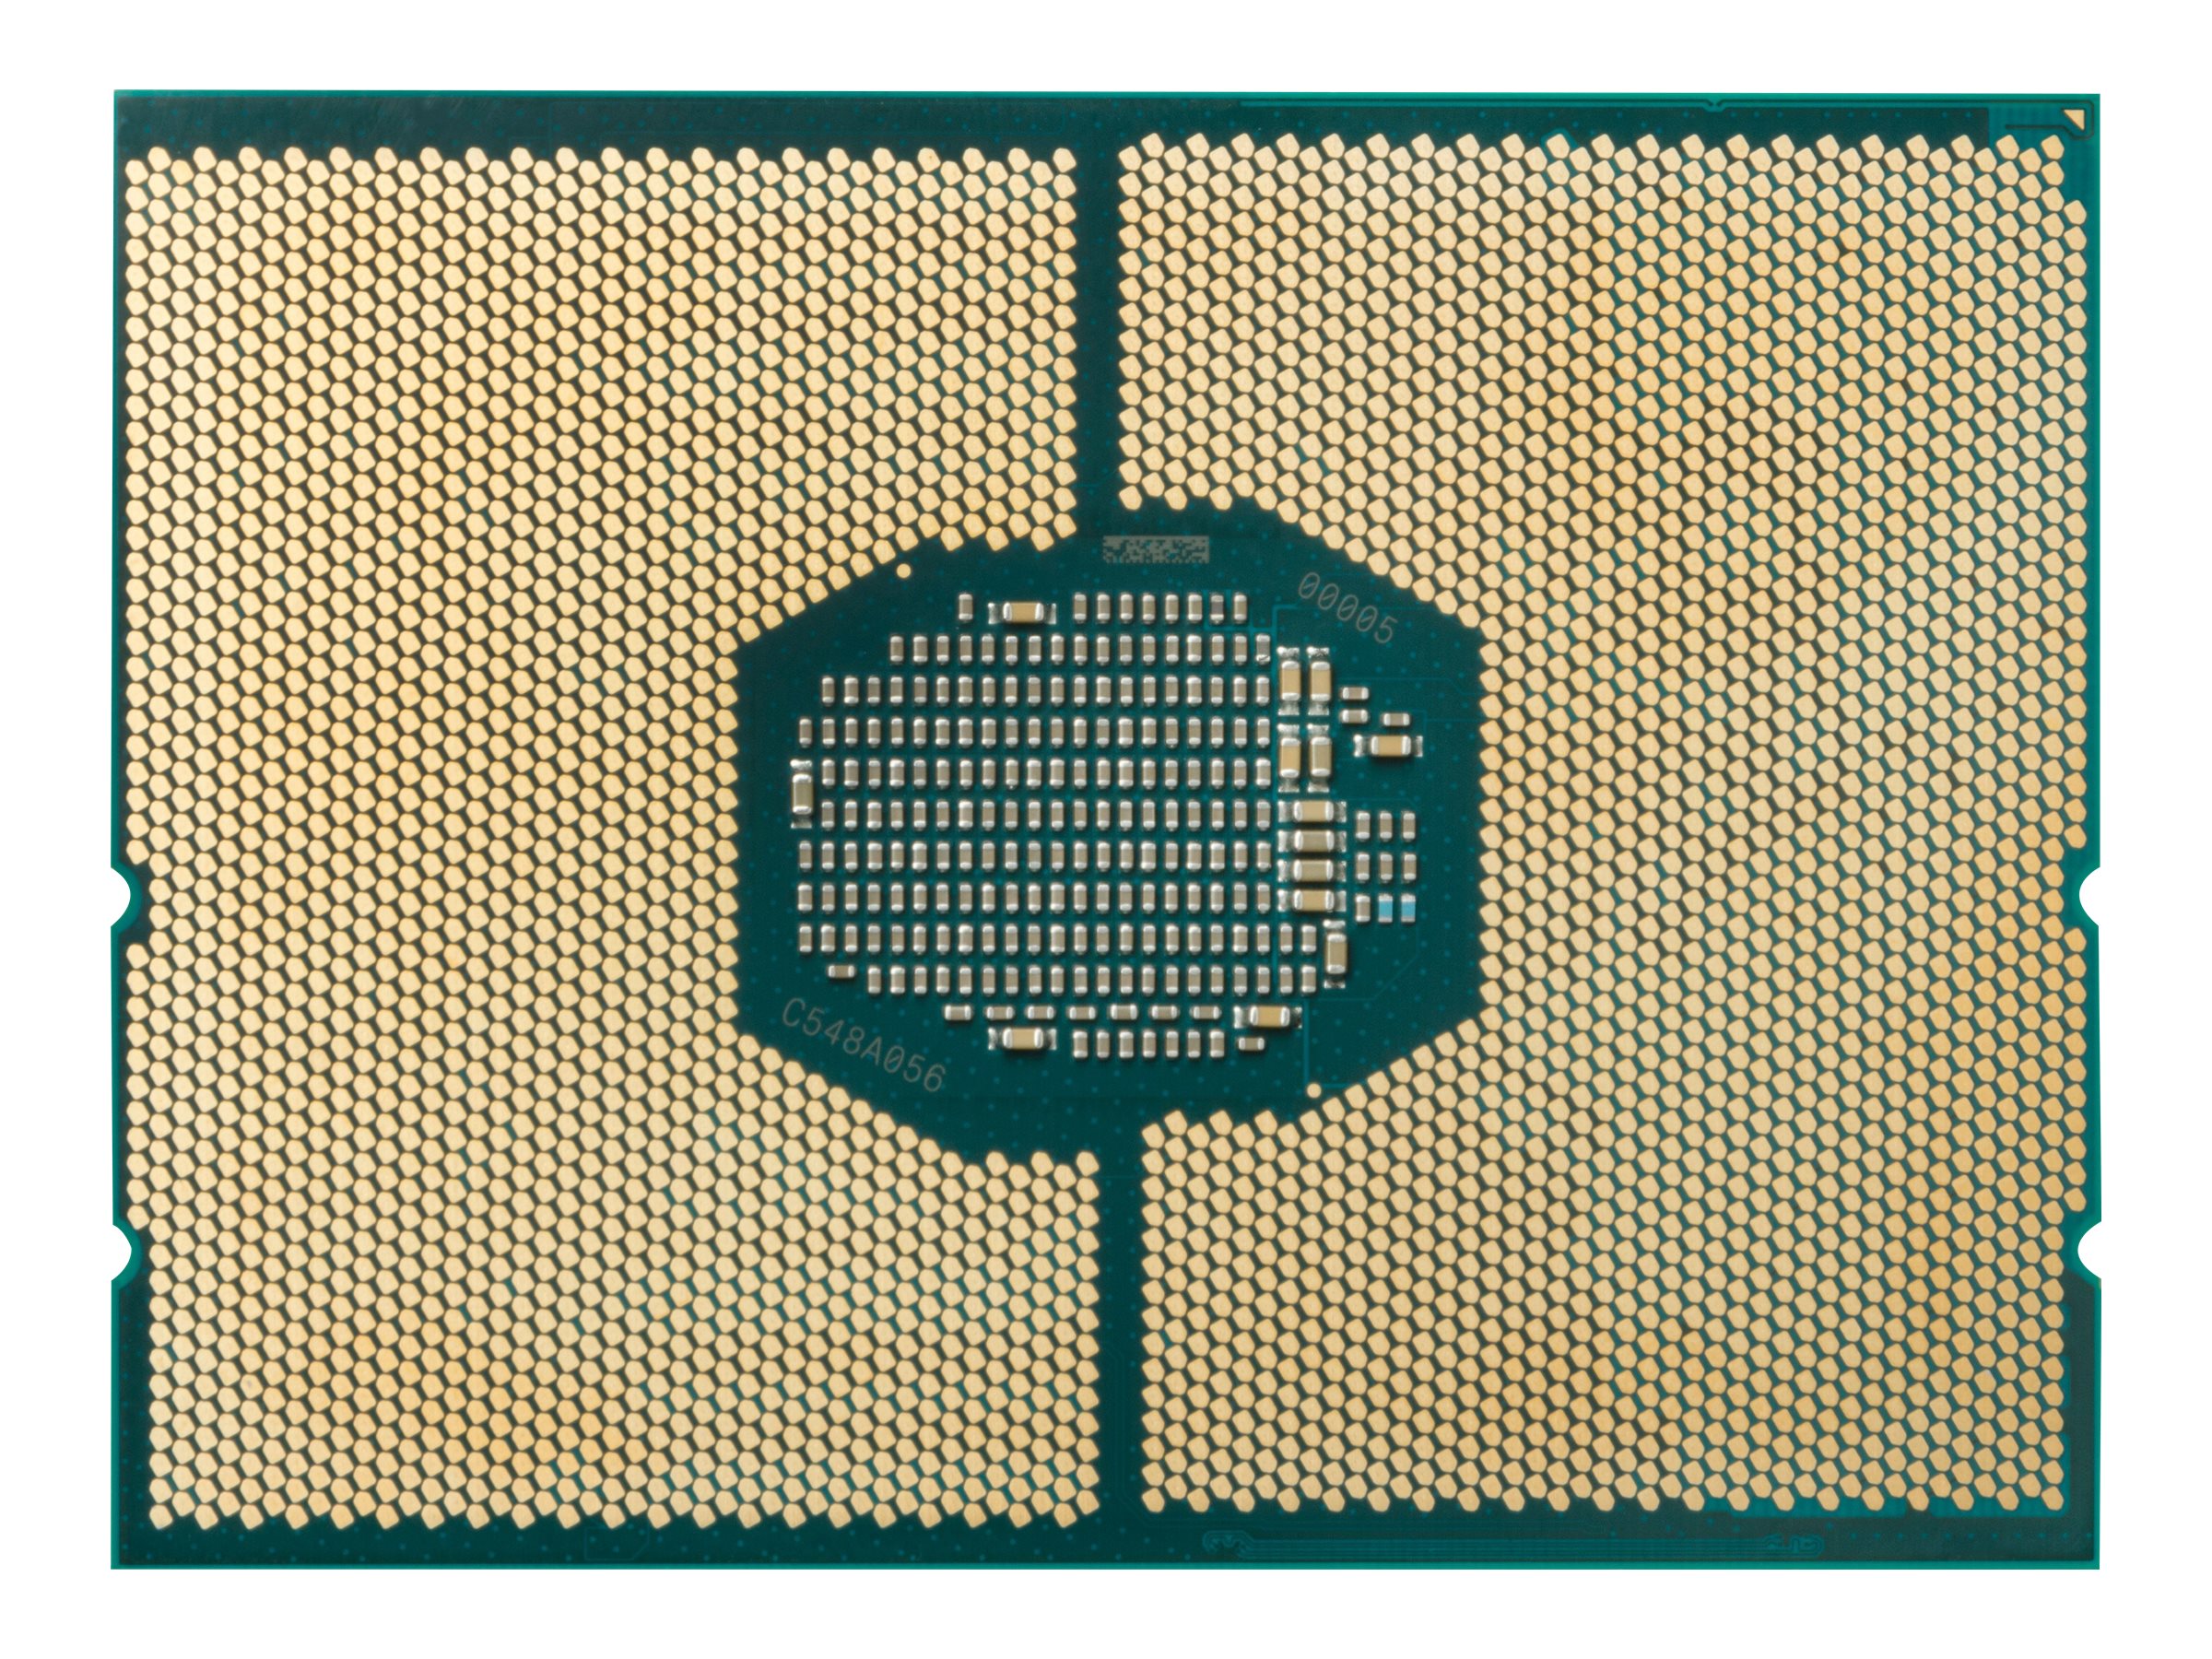 Intel Xeon Gold 6140 - 2.3 GHz - 18 Kerne - 36 Threads - 24.75 MB Cache-Speicher - LGA3647 Socket